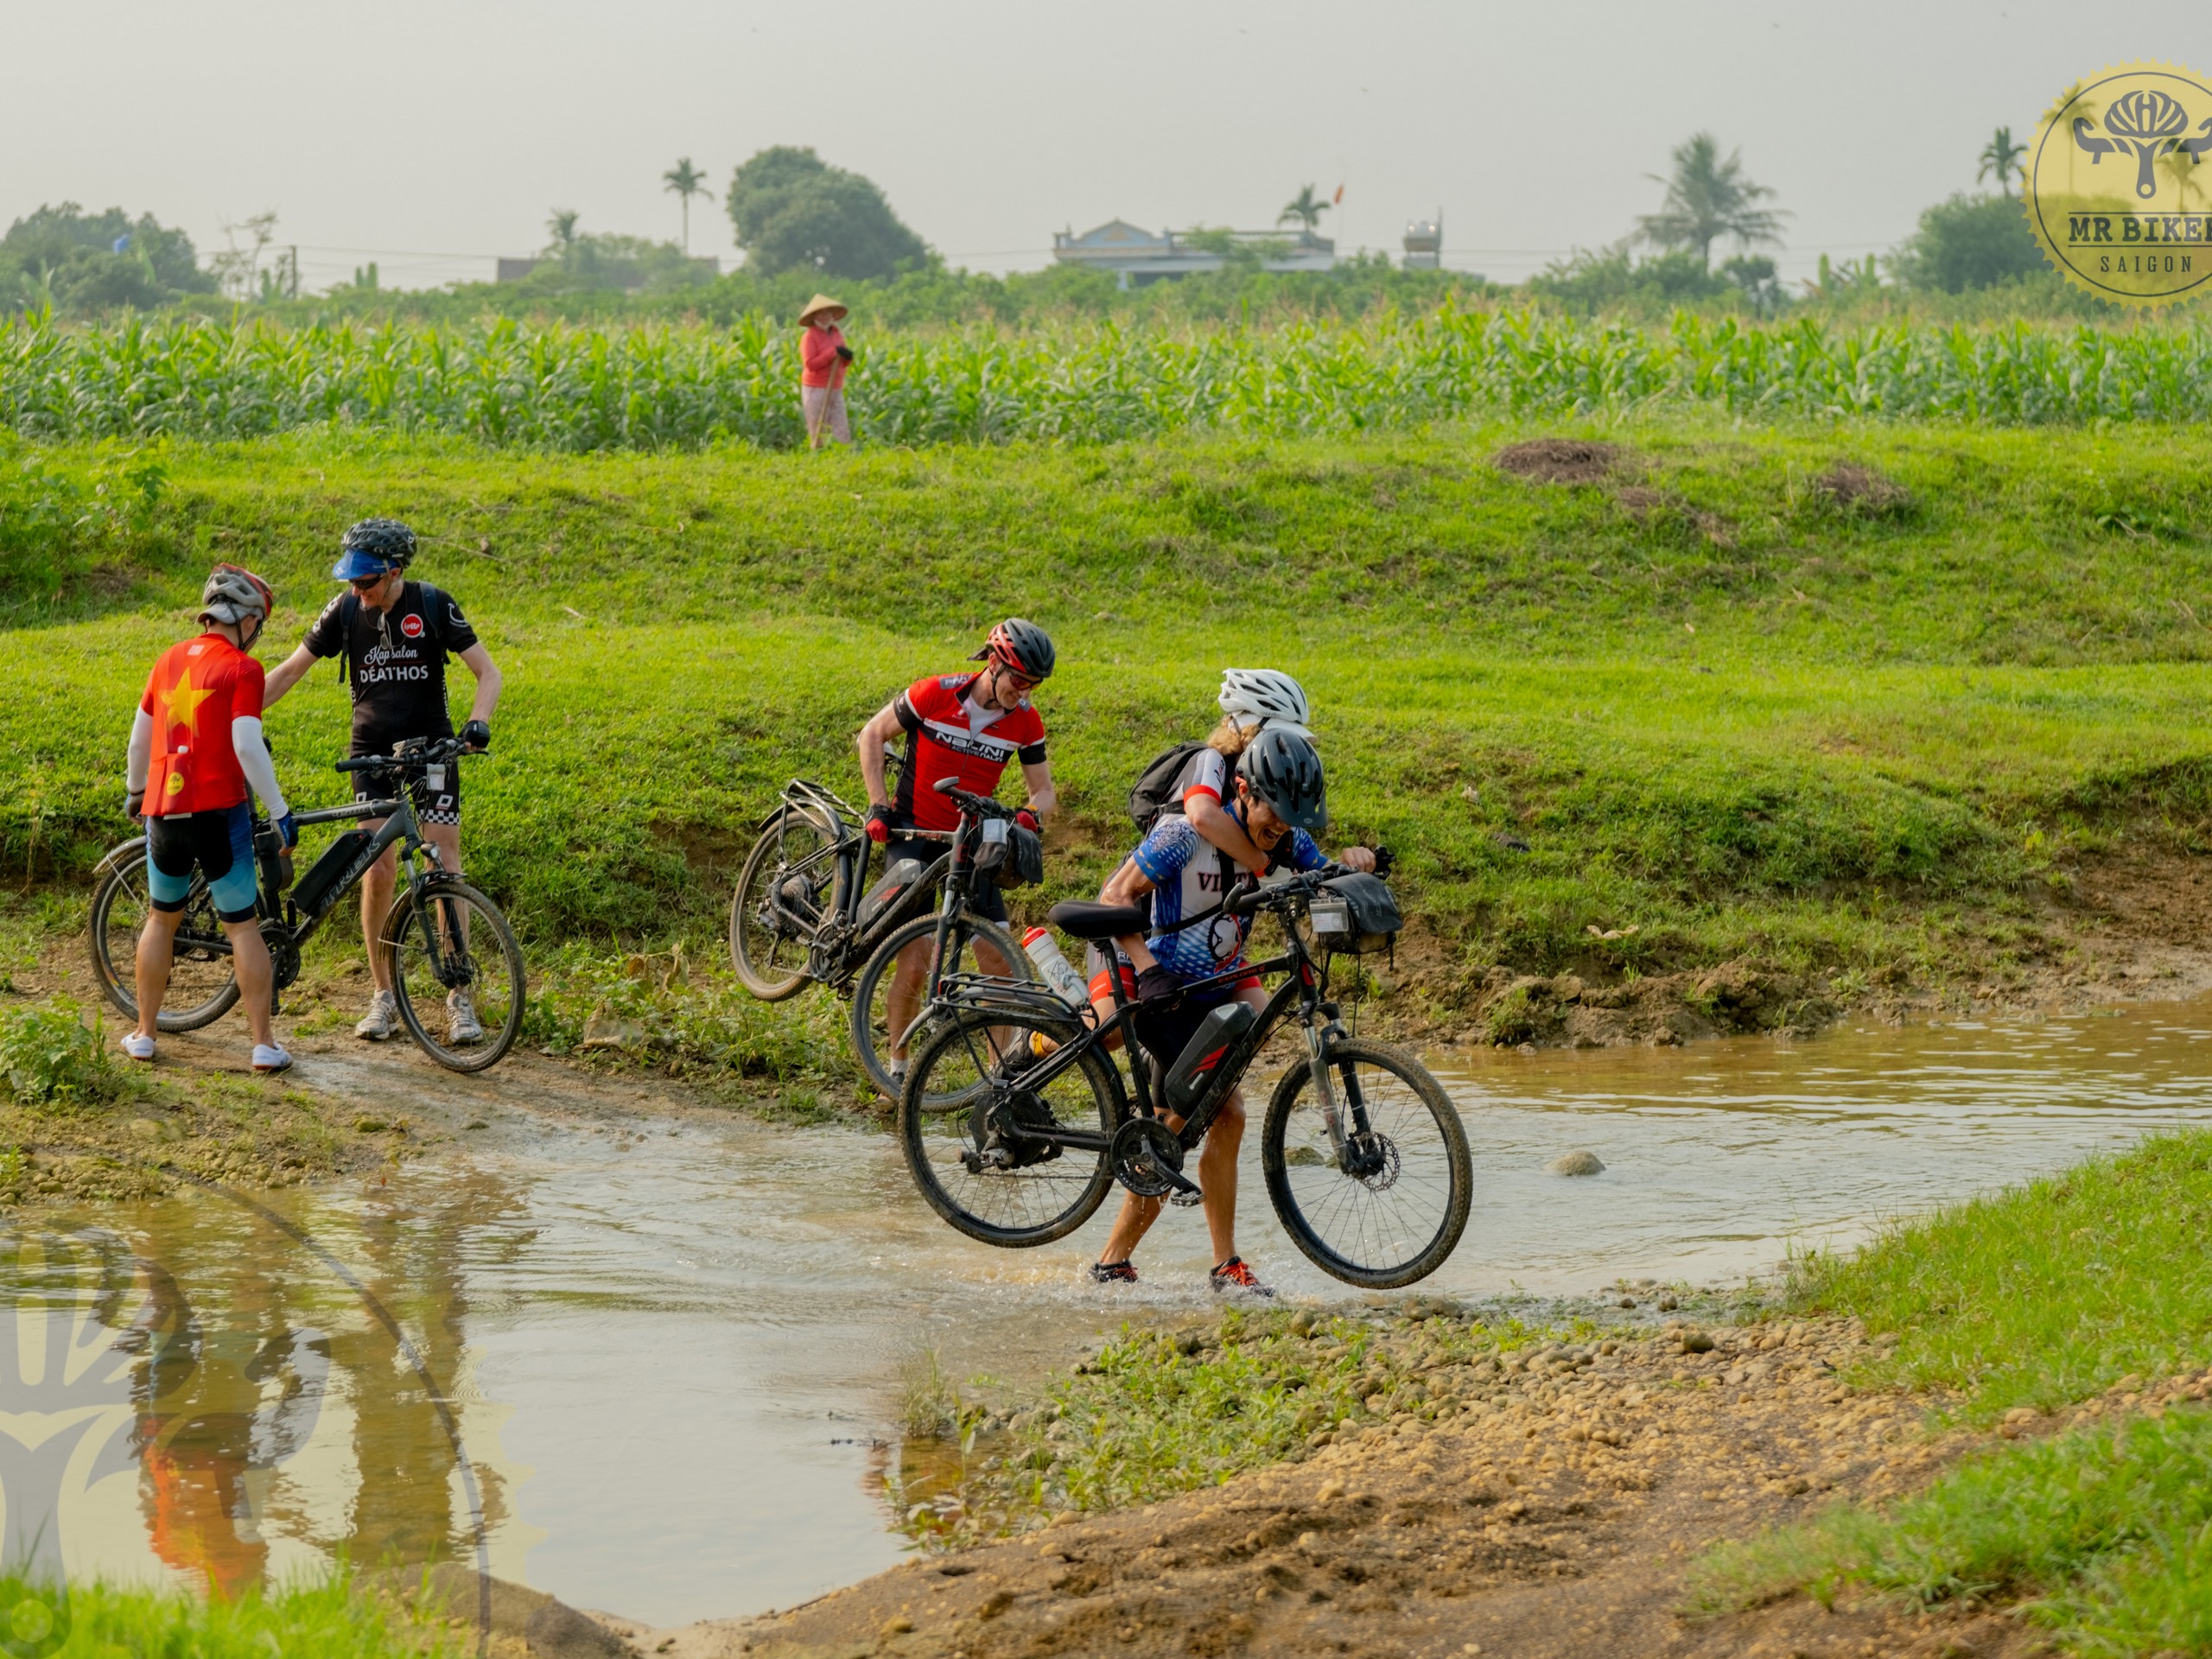 Group of bikers crossing the river in Vietnam